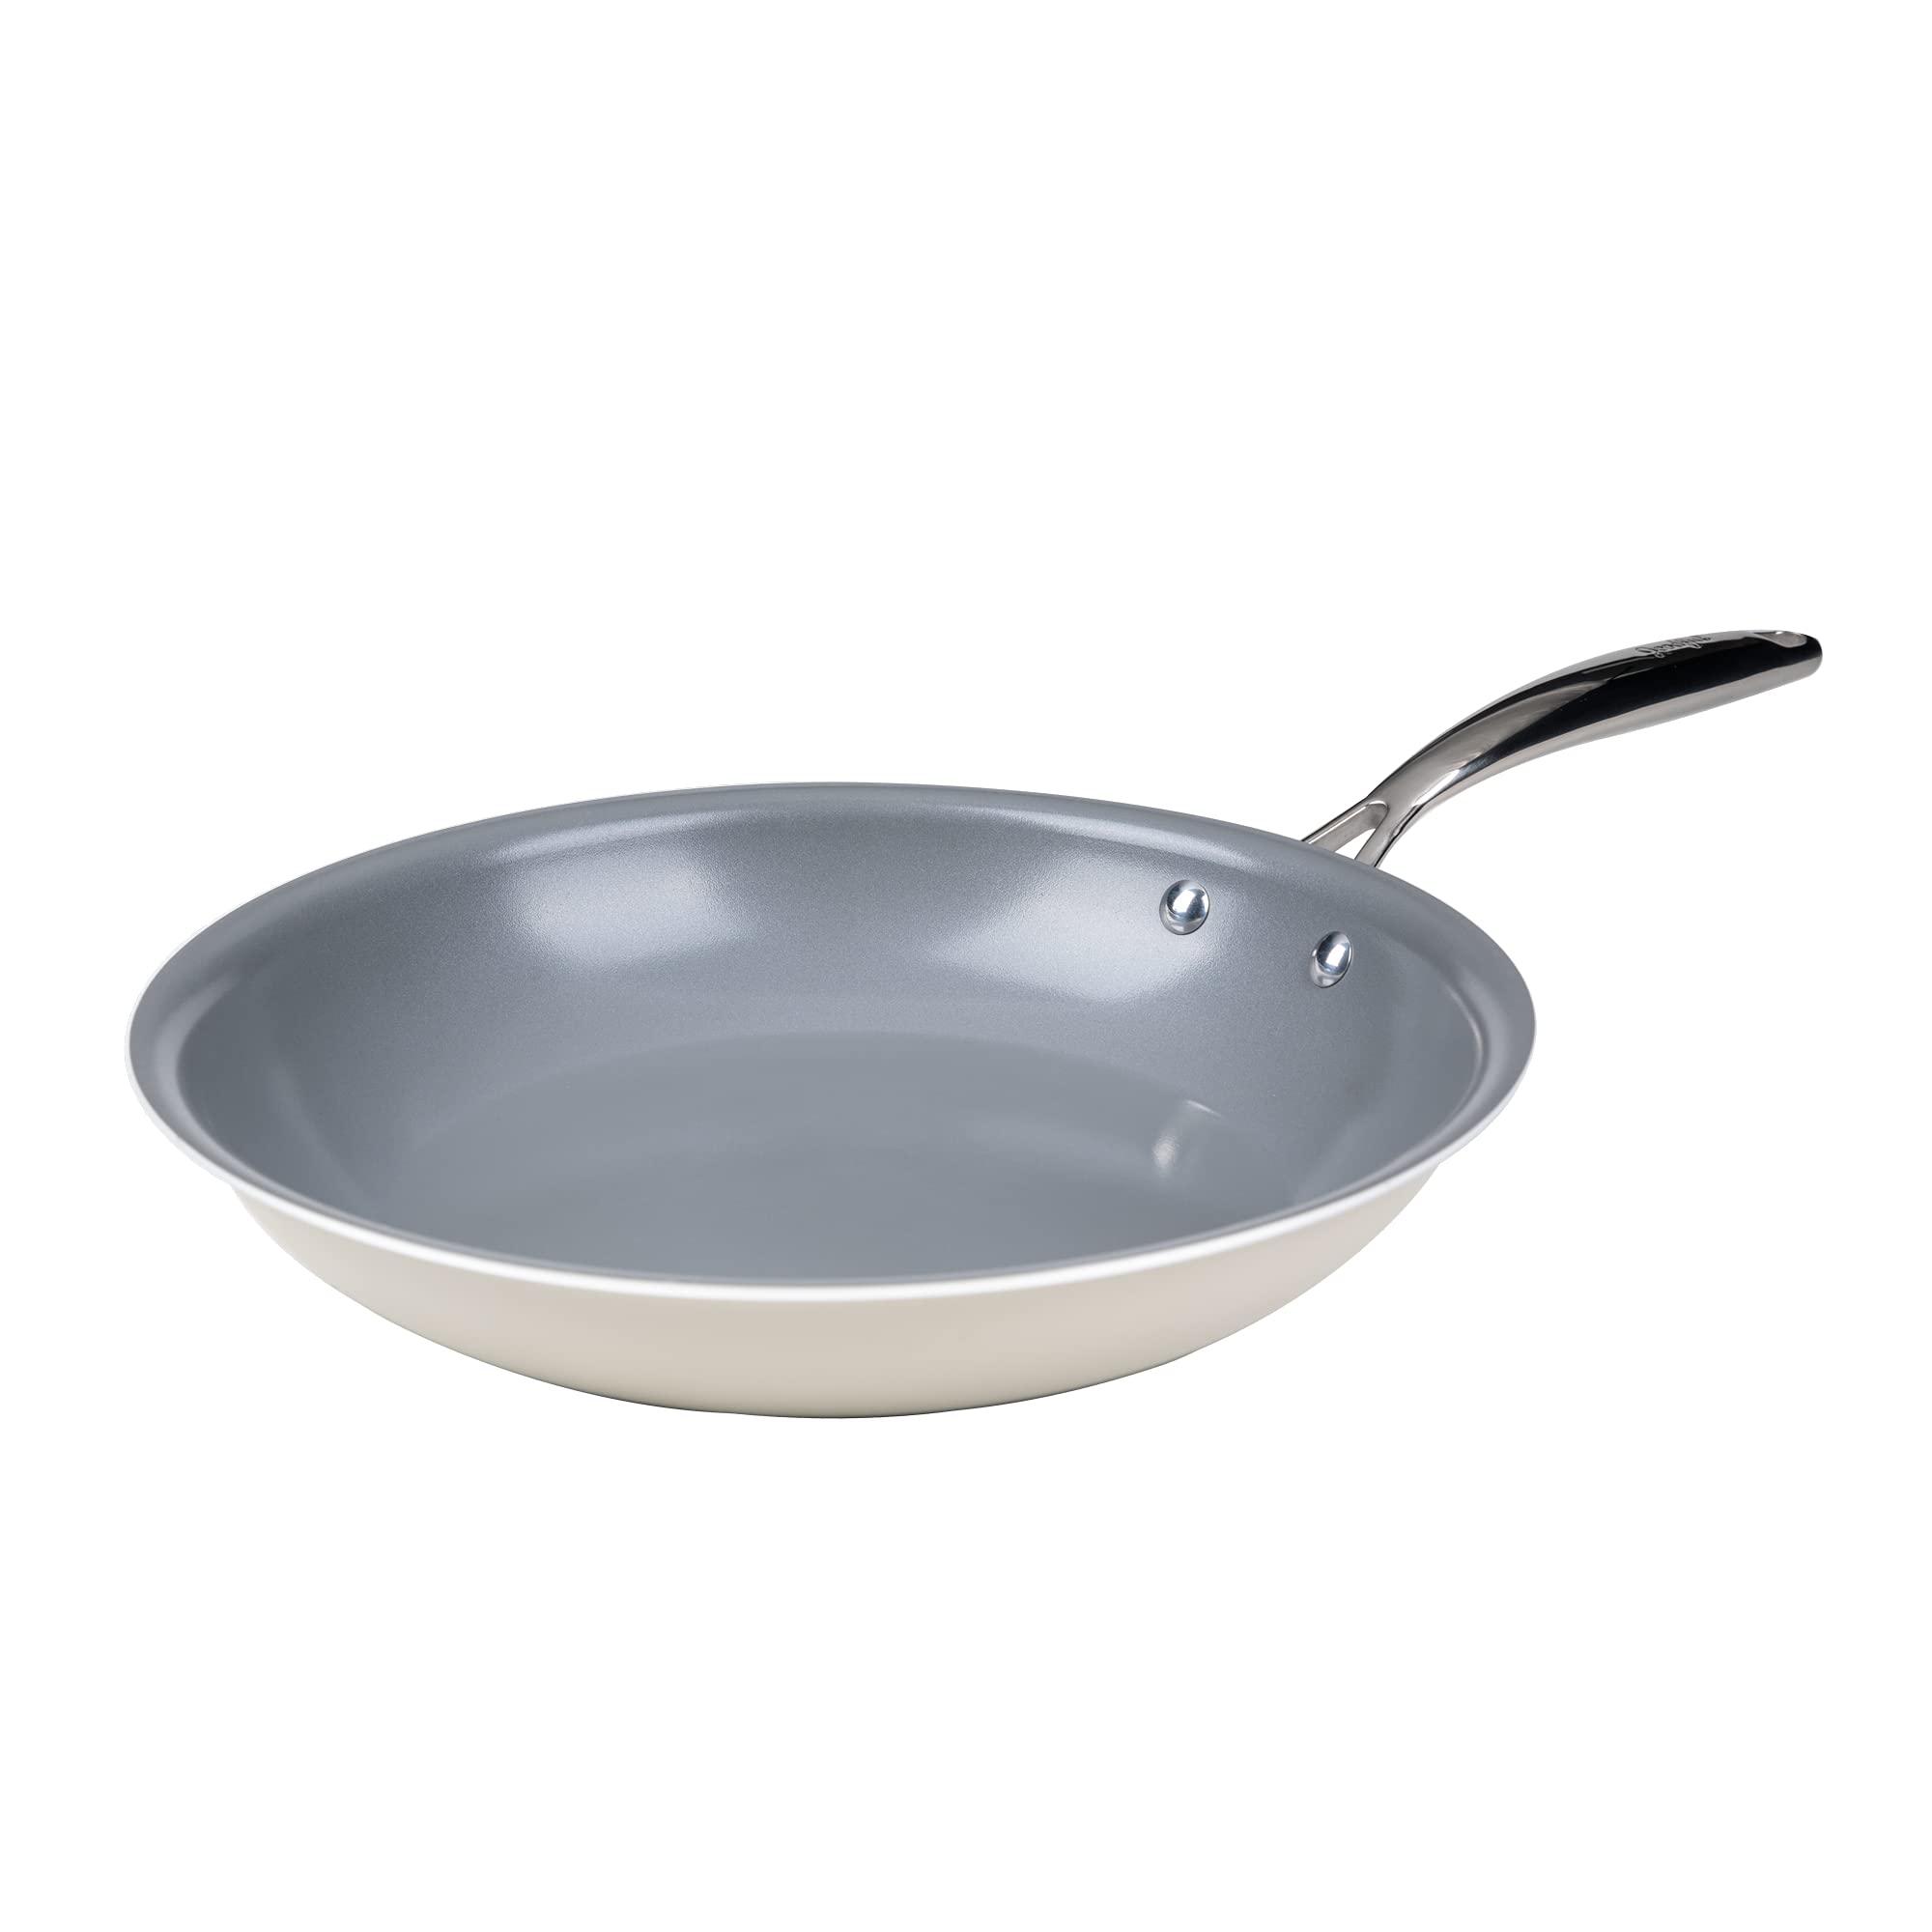 Goodful Ceramic Nonstick 11 Inch Frying Pan, Dishwasher Safe